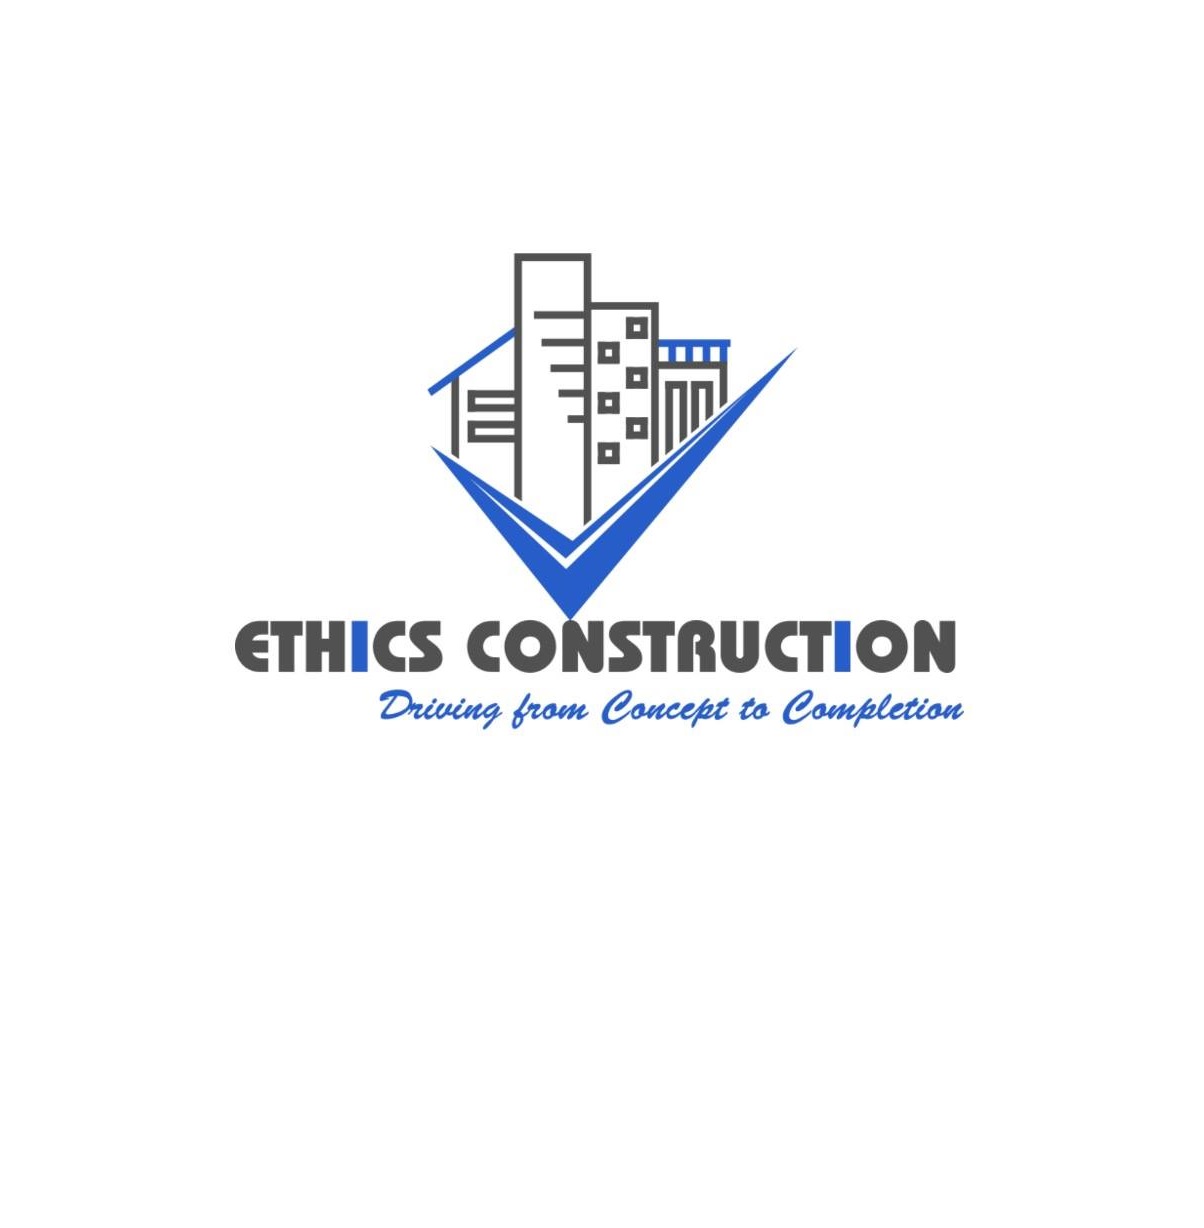 Ethics construction